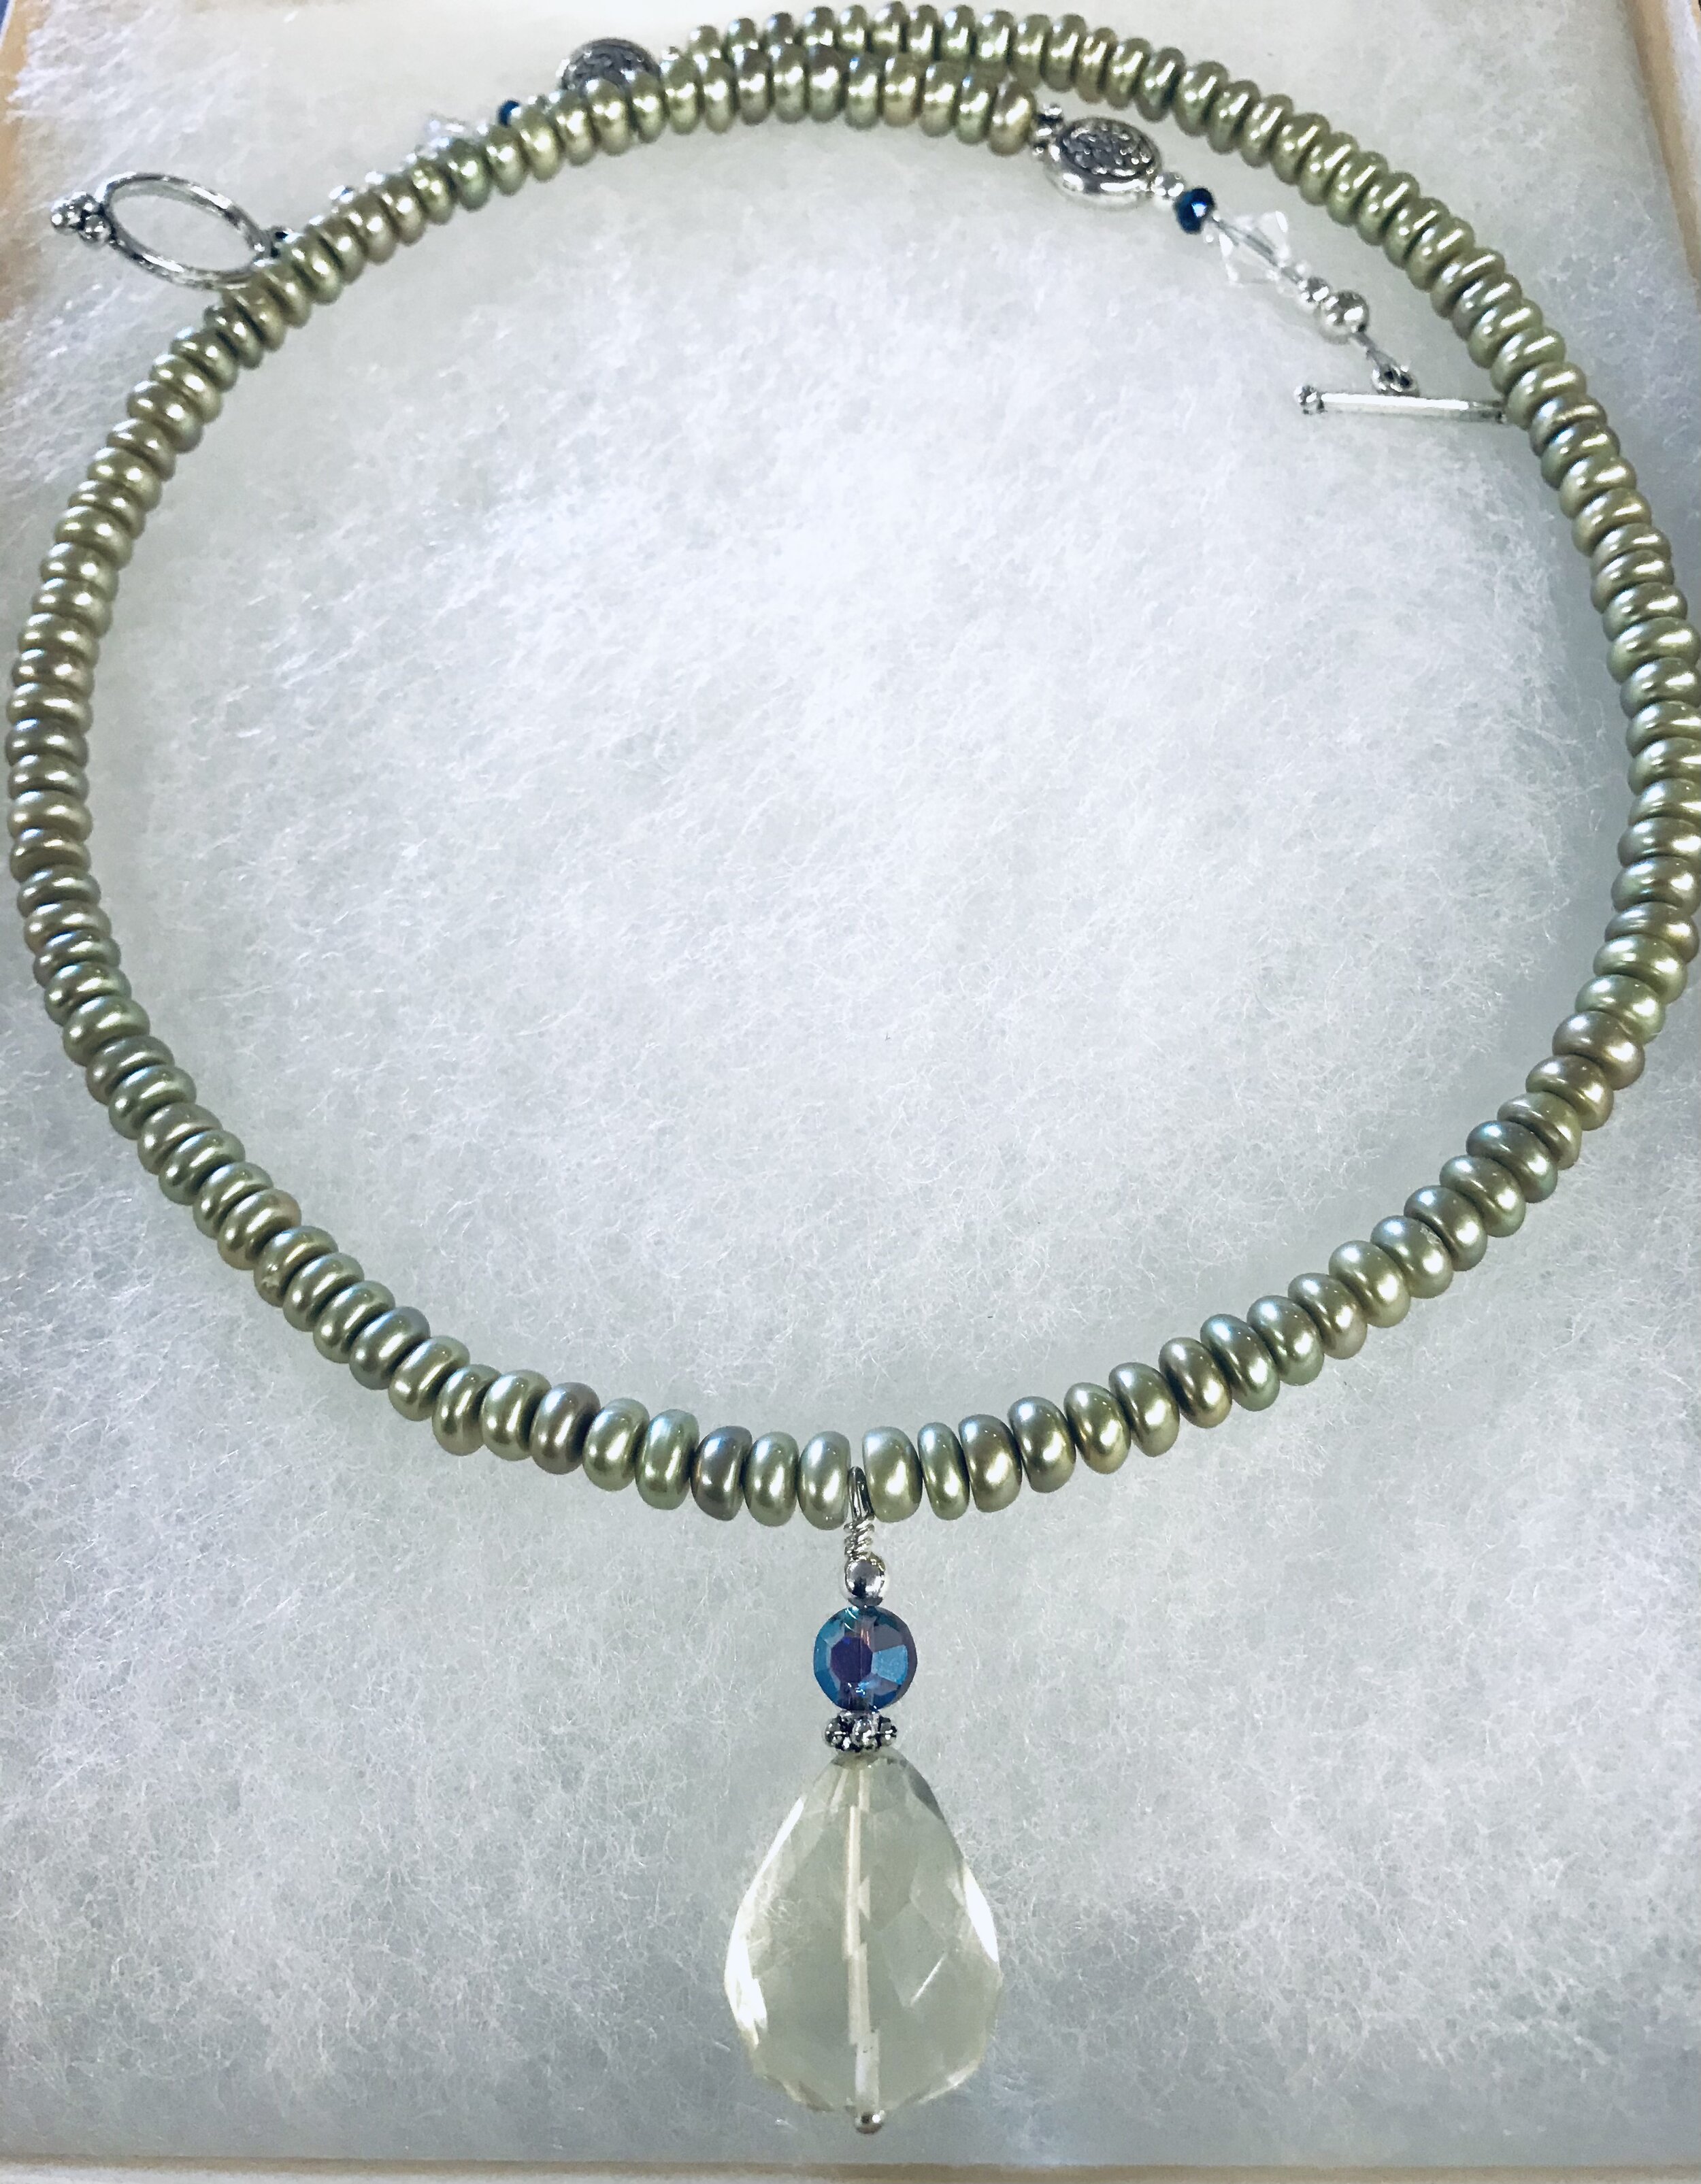   Freshwater pearl (dyed) with lemon quartz pendant.    $39.99    